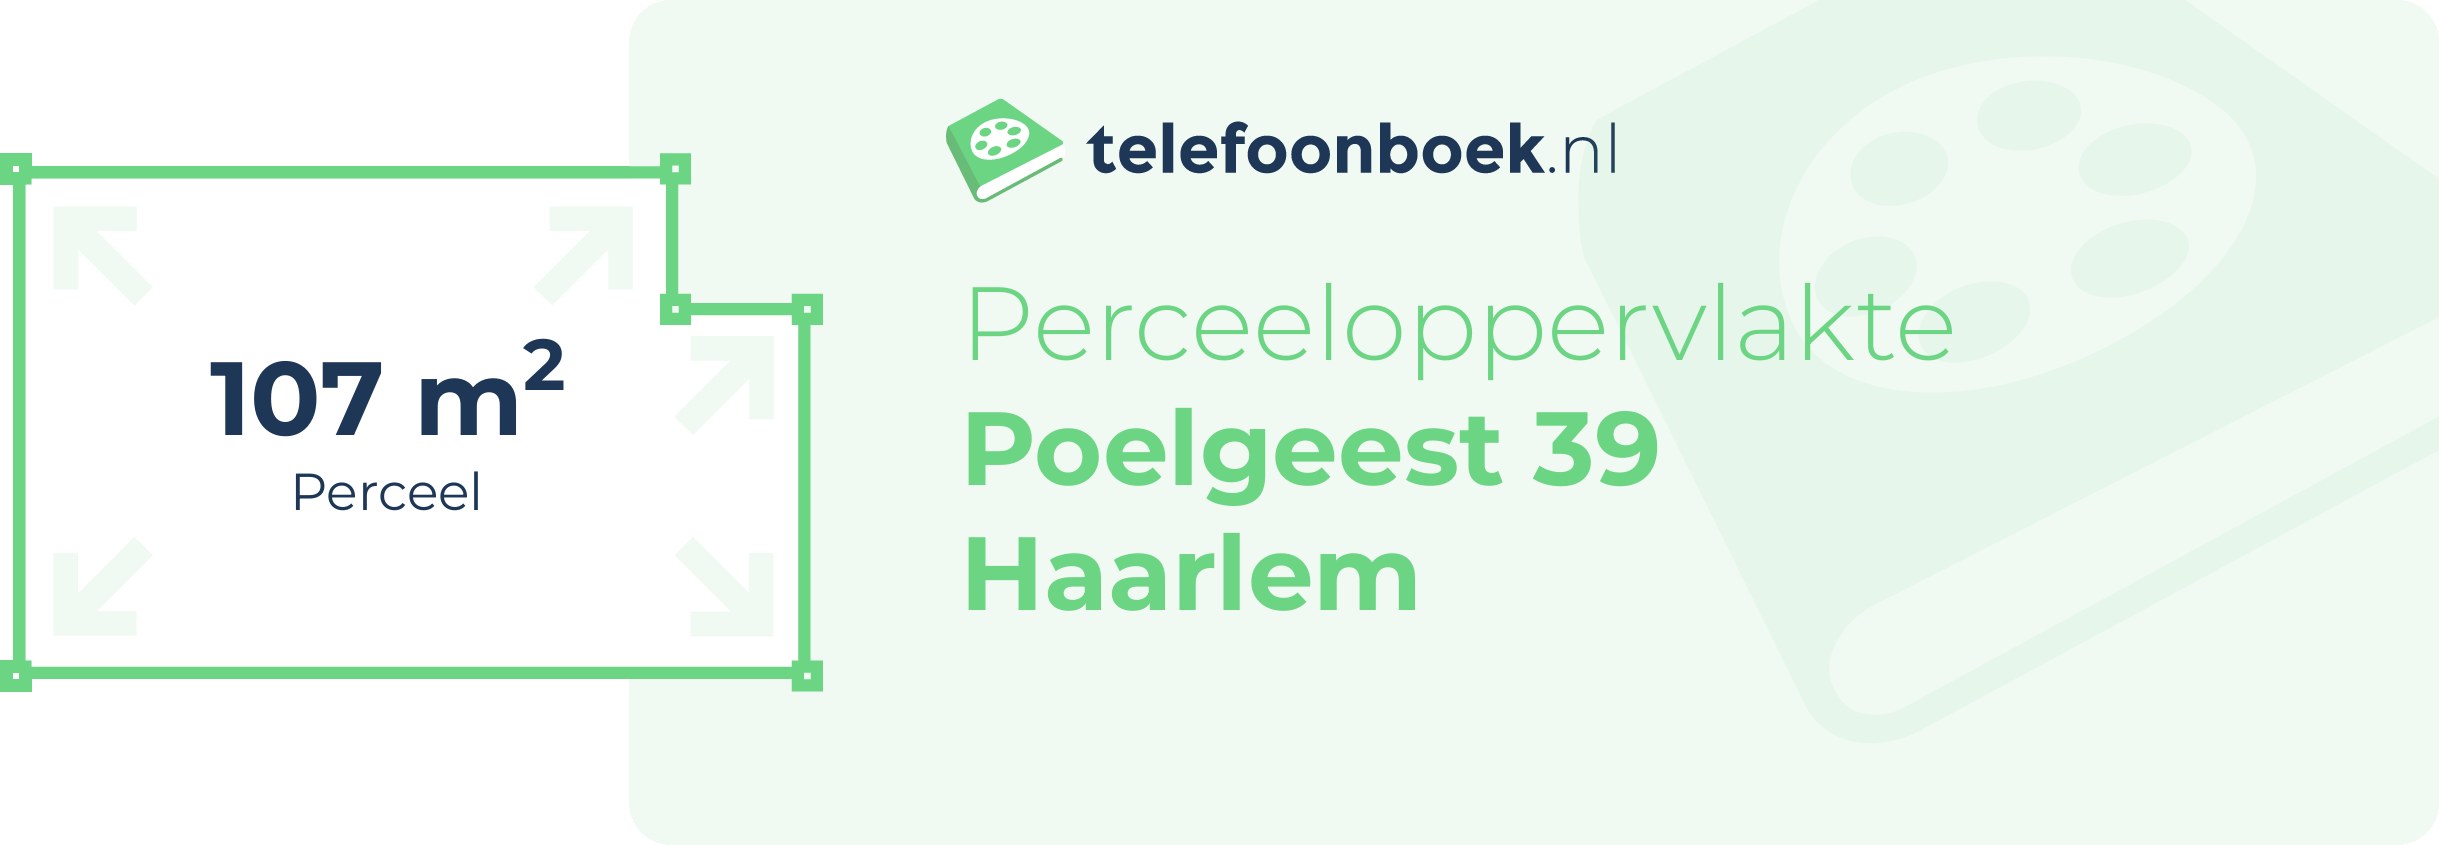 Perceeloppervlakte Poelgeest 39 Haarlem